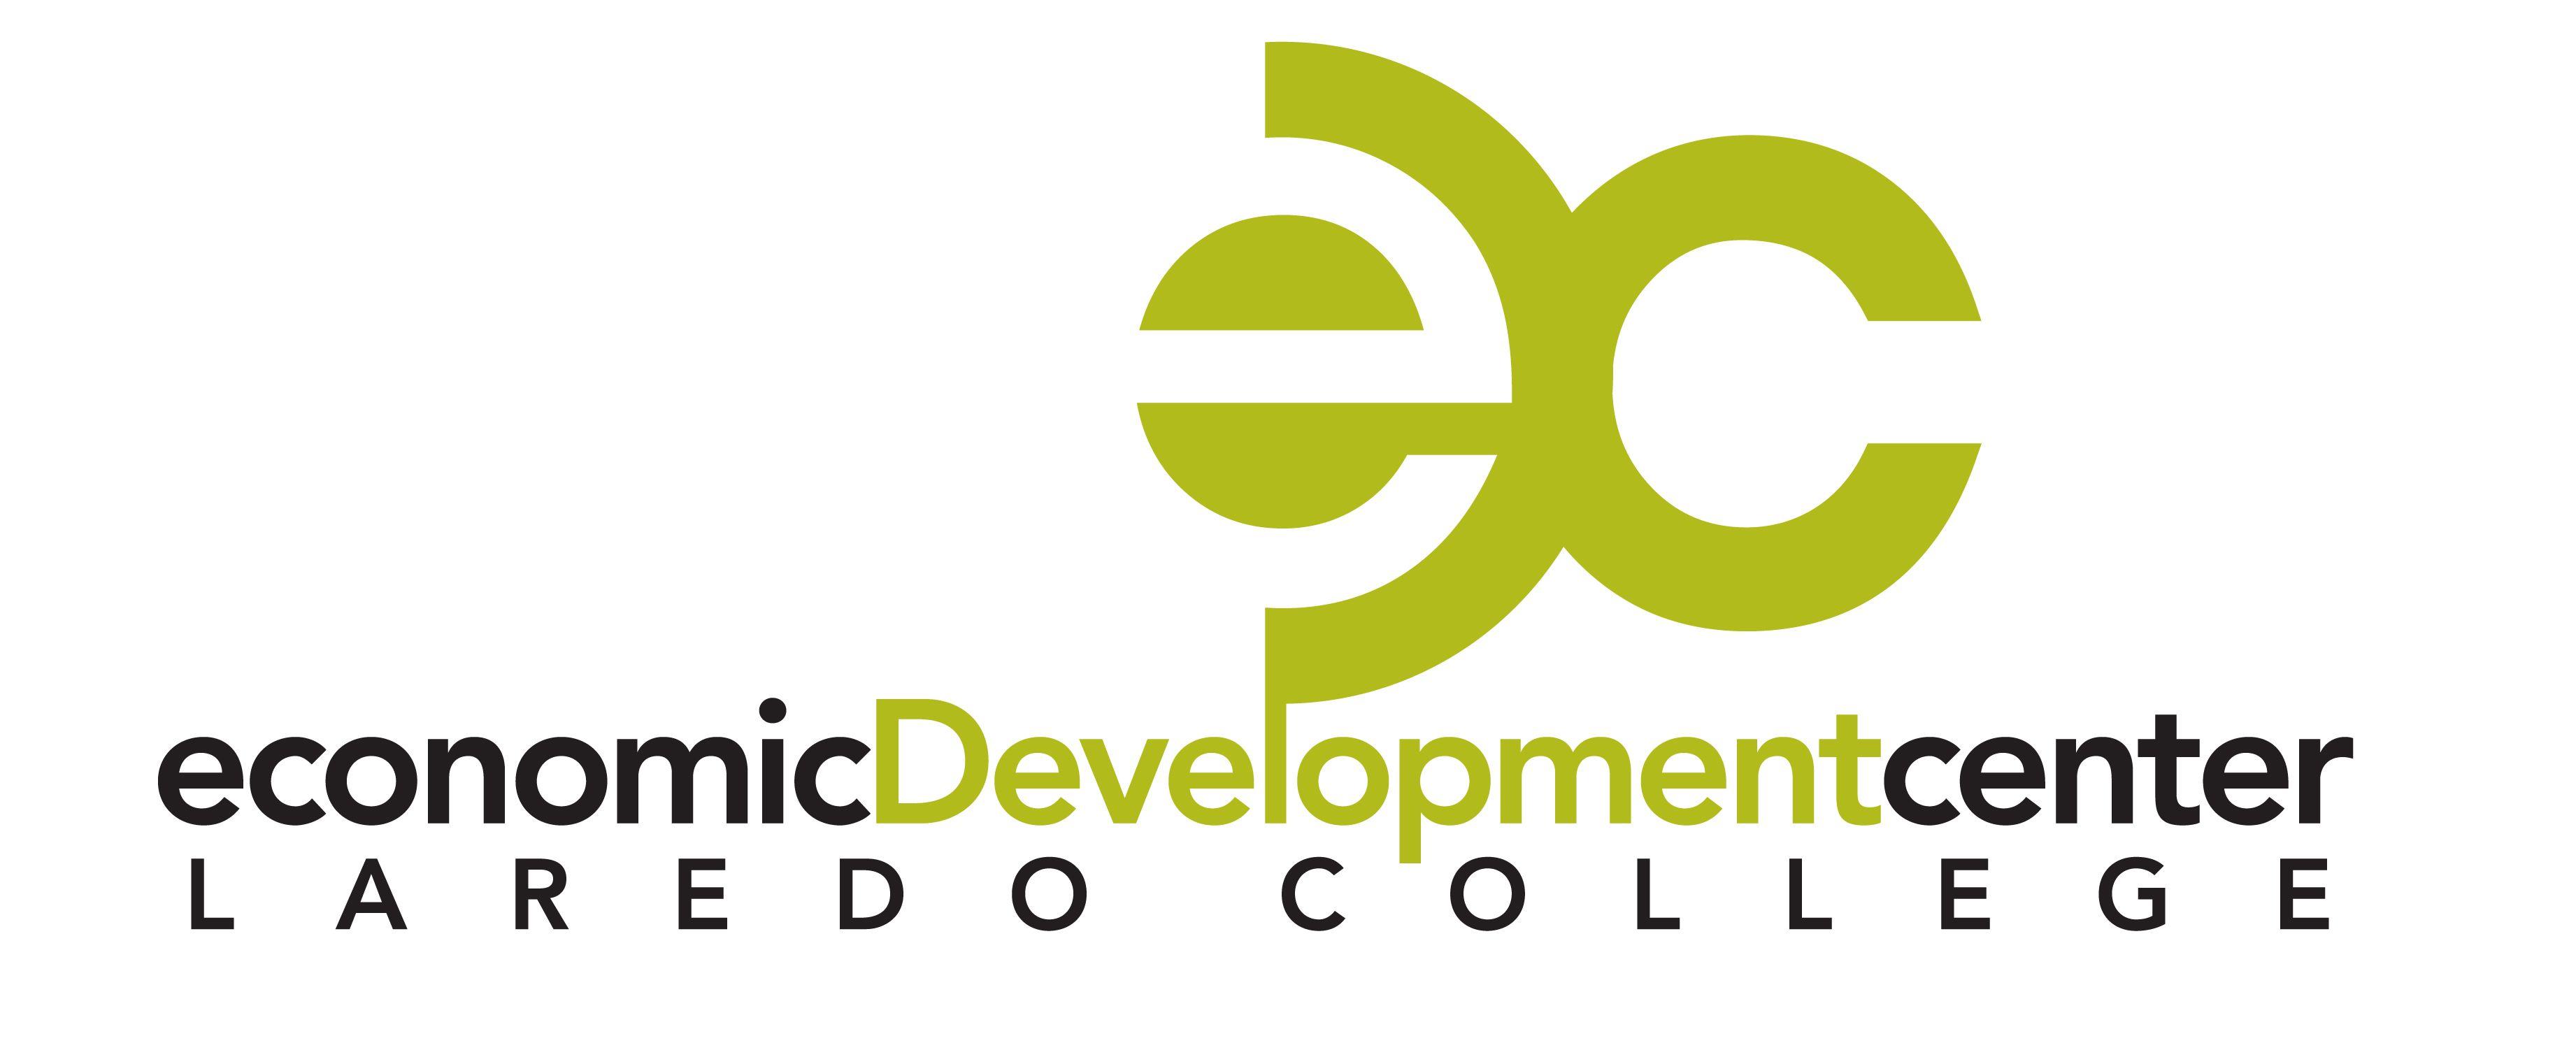 EDC Logo - Laredo College